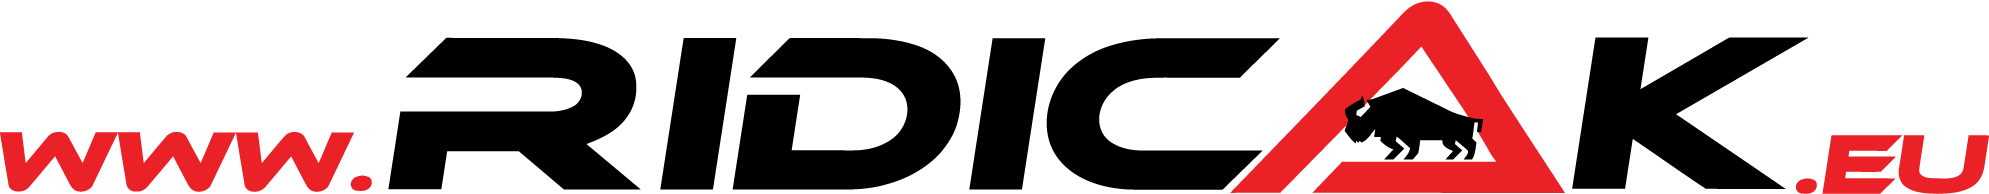 Autoškola Zubr logo